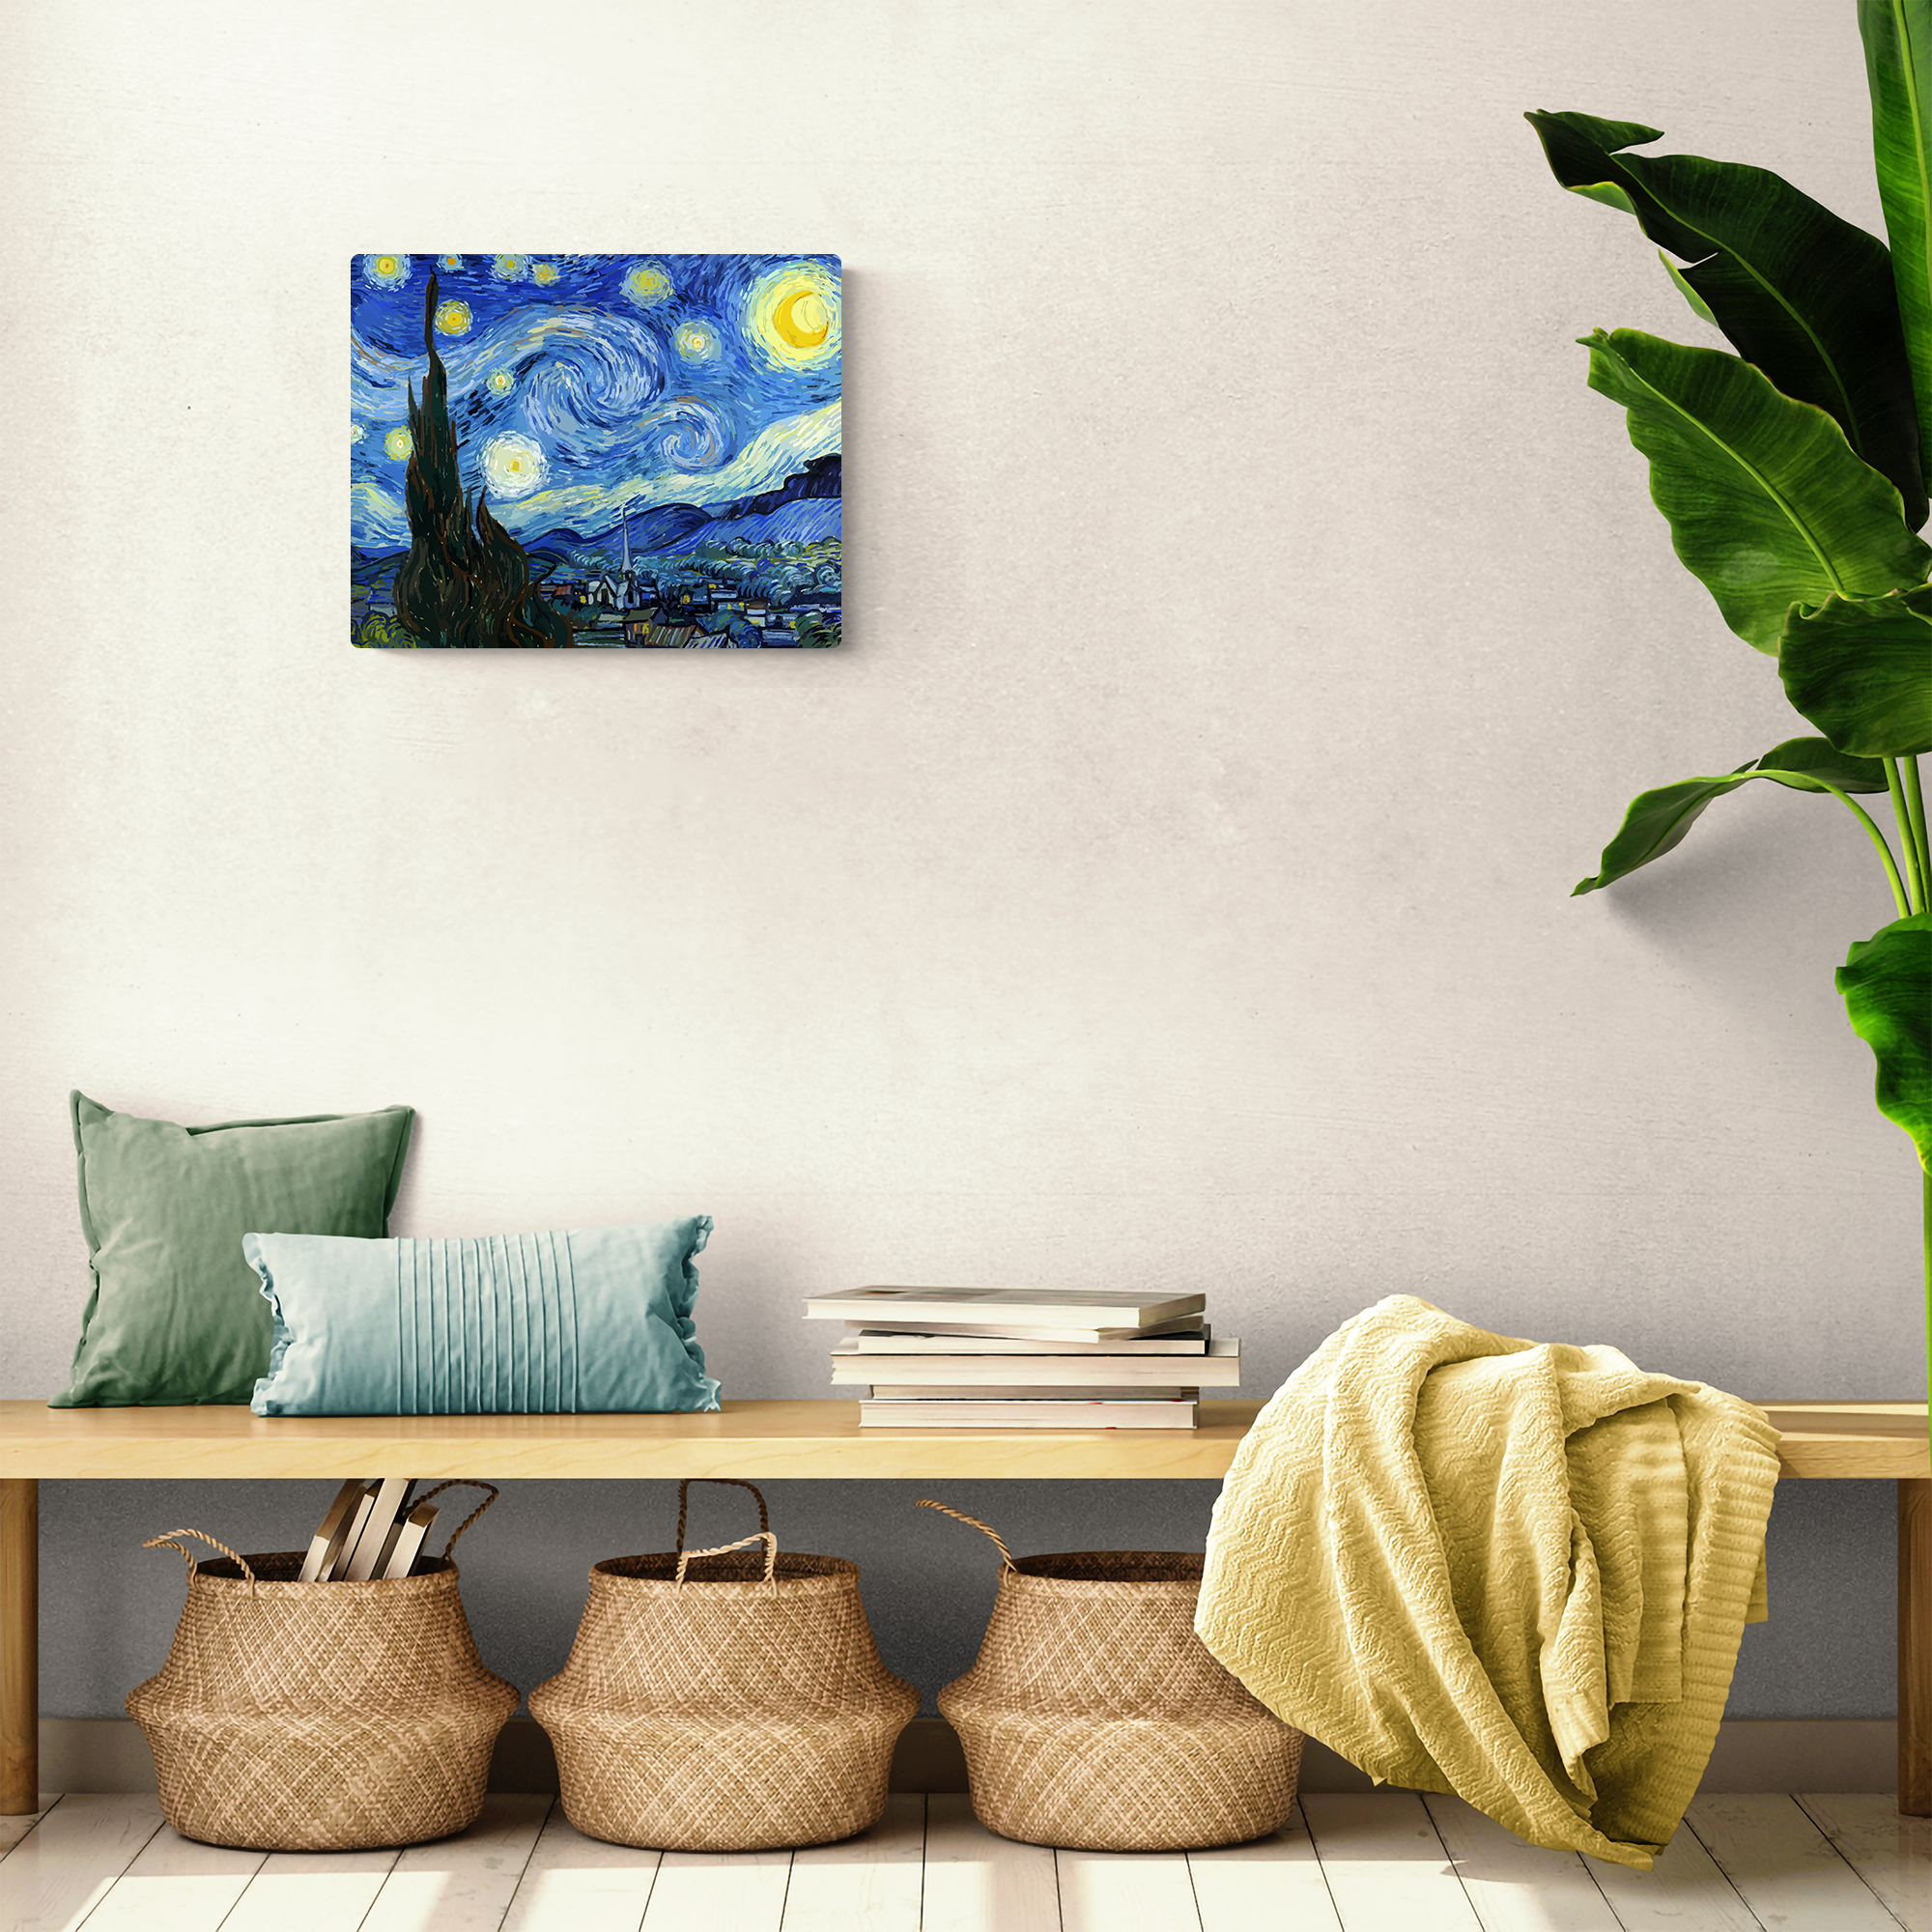 The Starry Night: pintura, arte, hobby, creatividad, pintar por números.